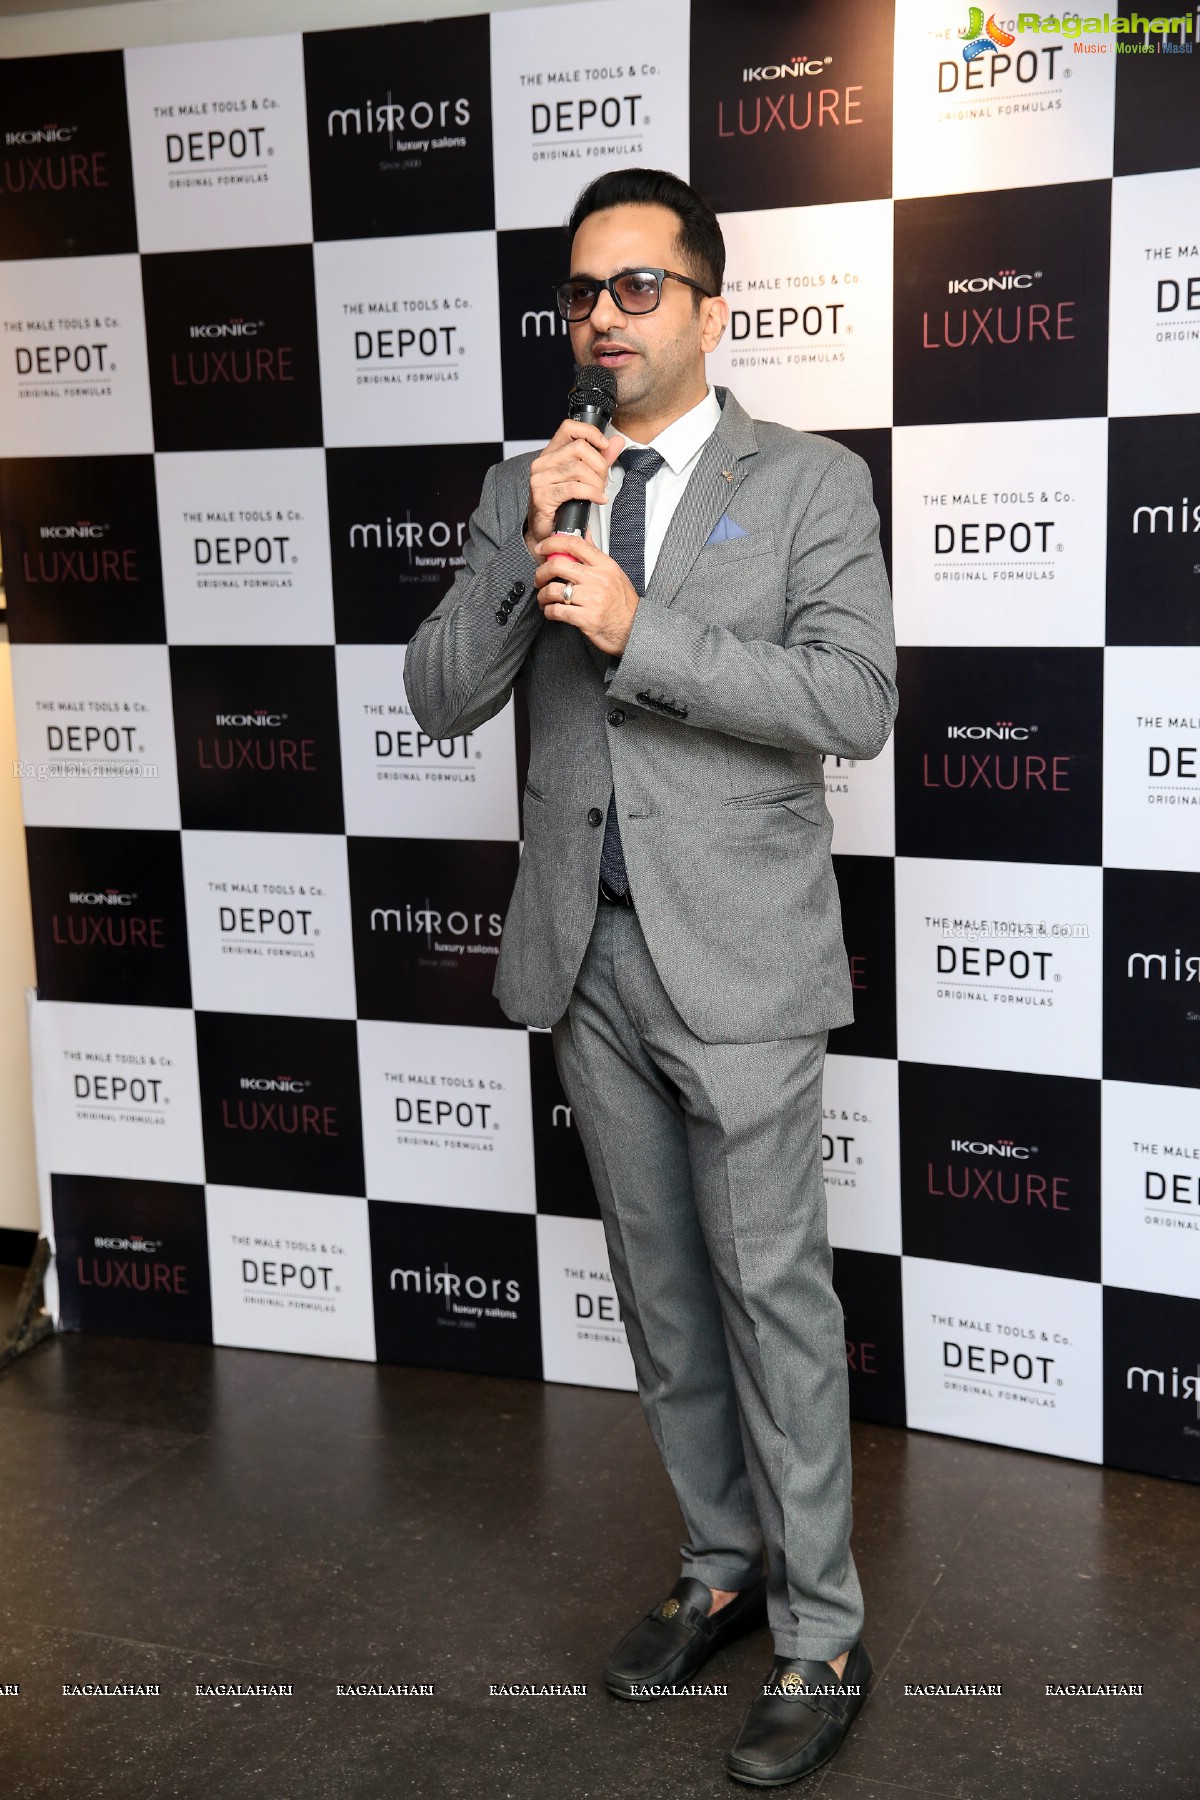 SSIZ International Launches DEPOT and Ikonic Luxure Into Telangana Markets